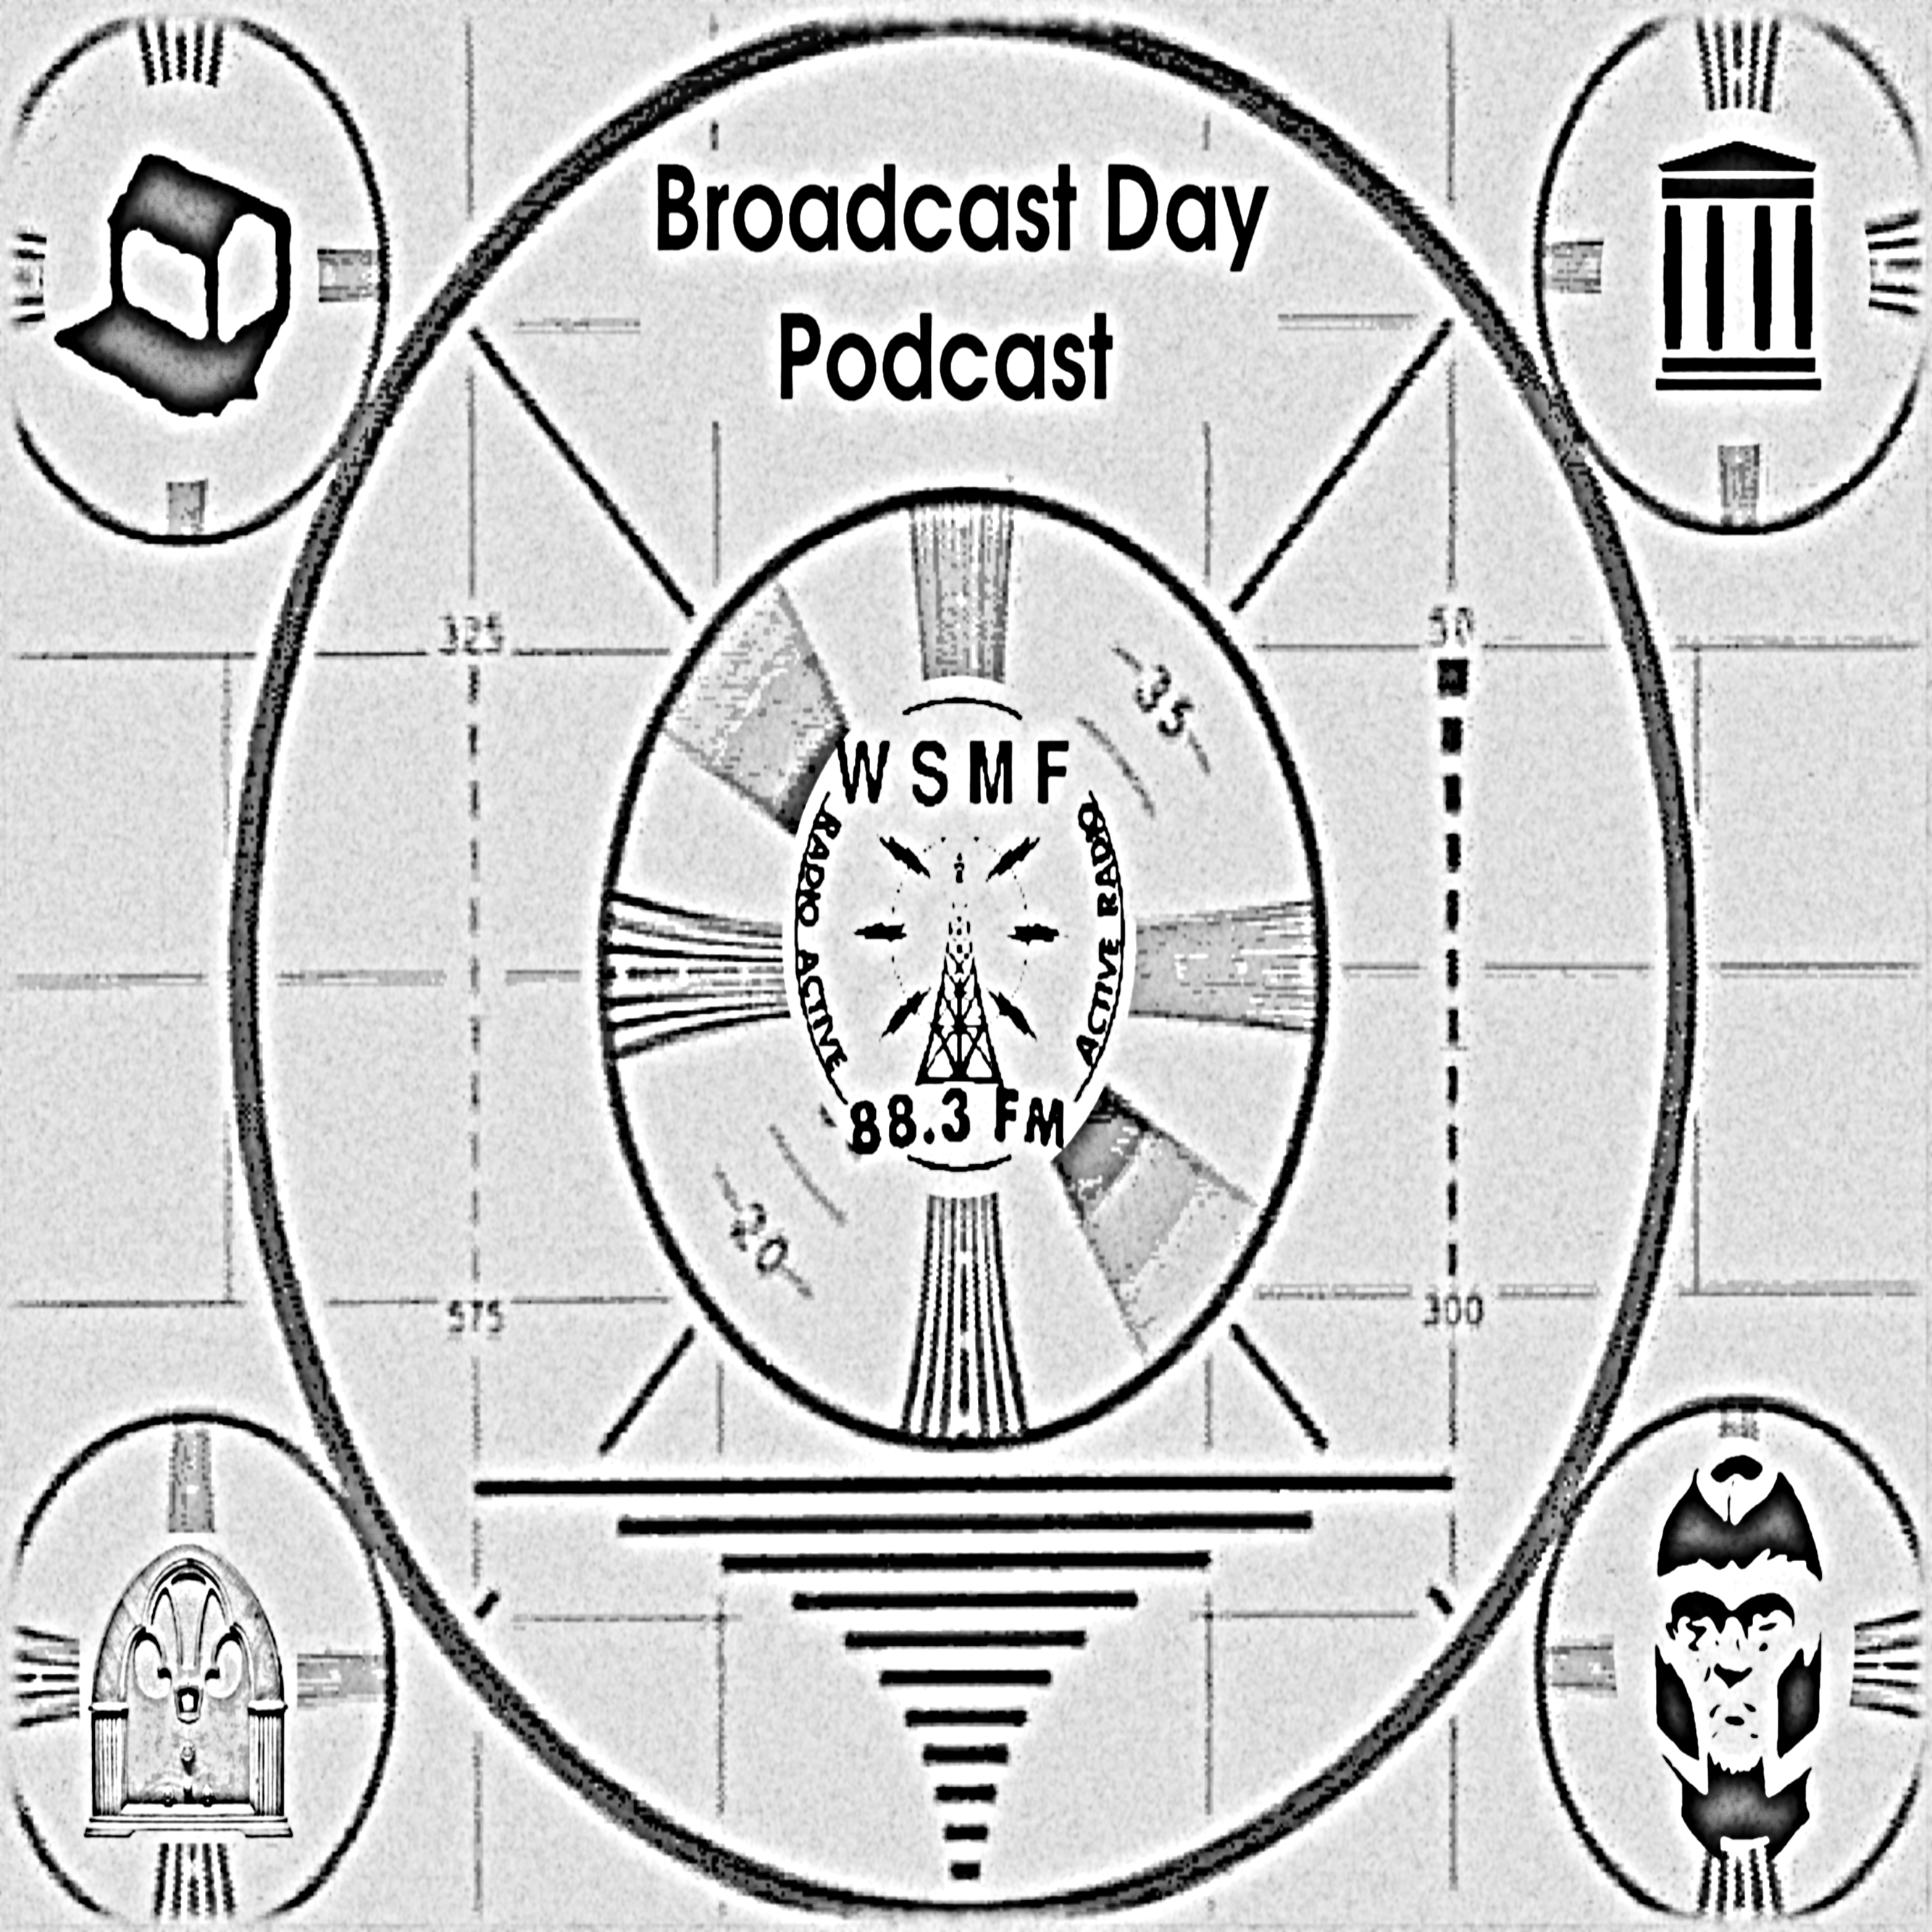 WSMF Broadcast Day Podcast